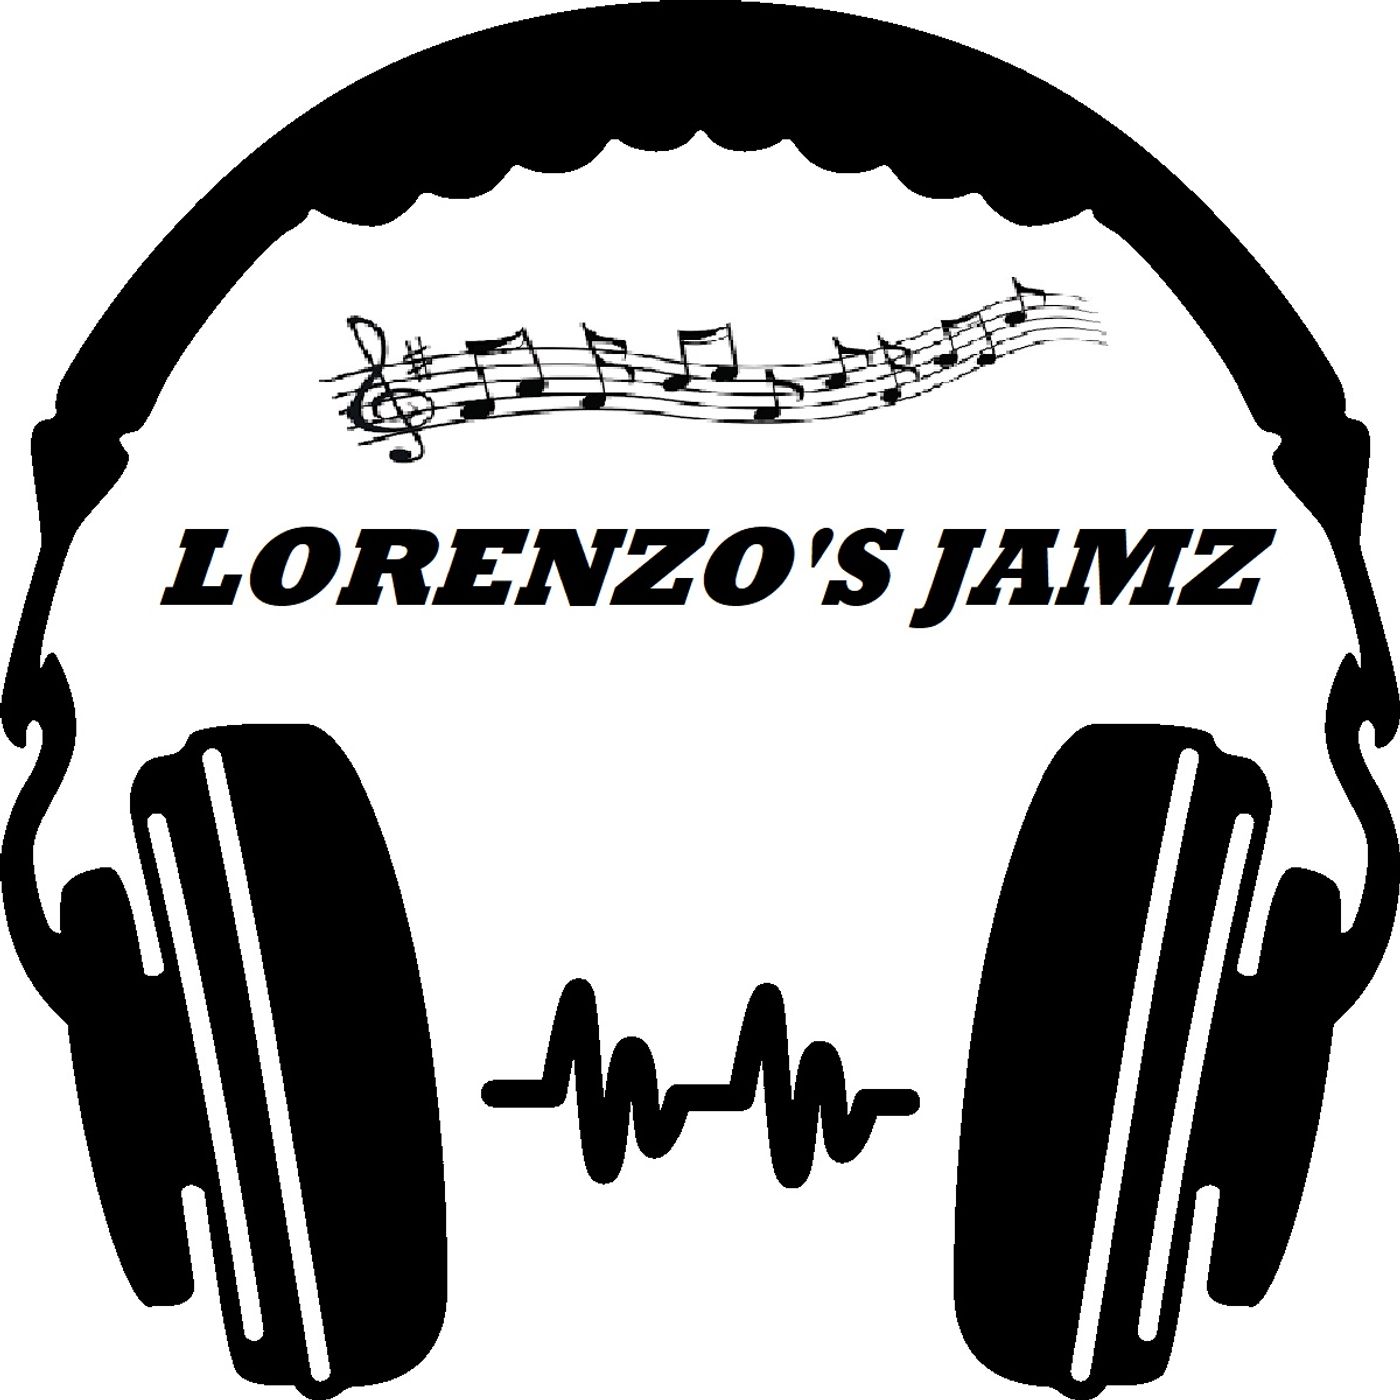 Lorenzo's Jamz